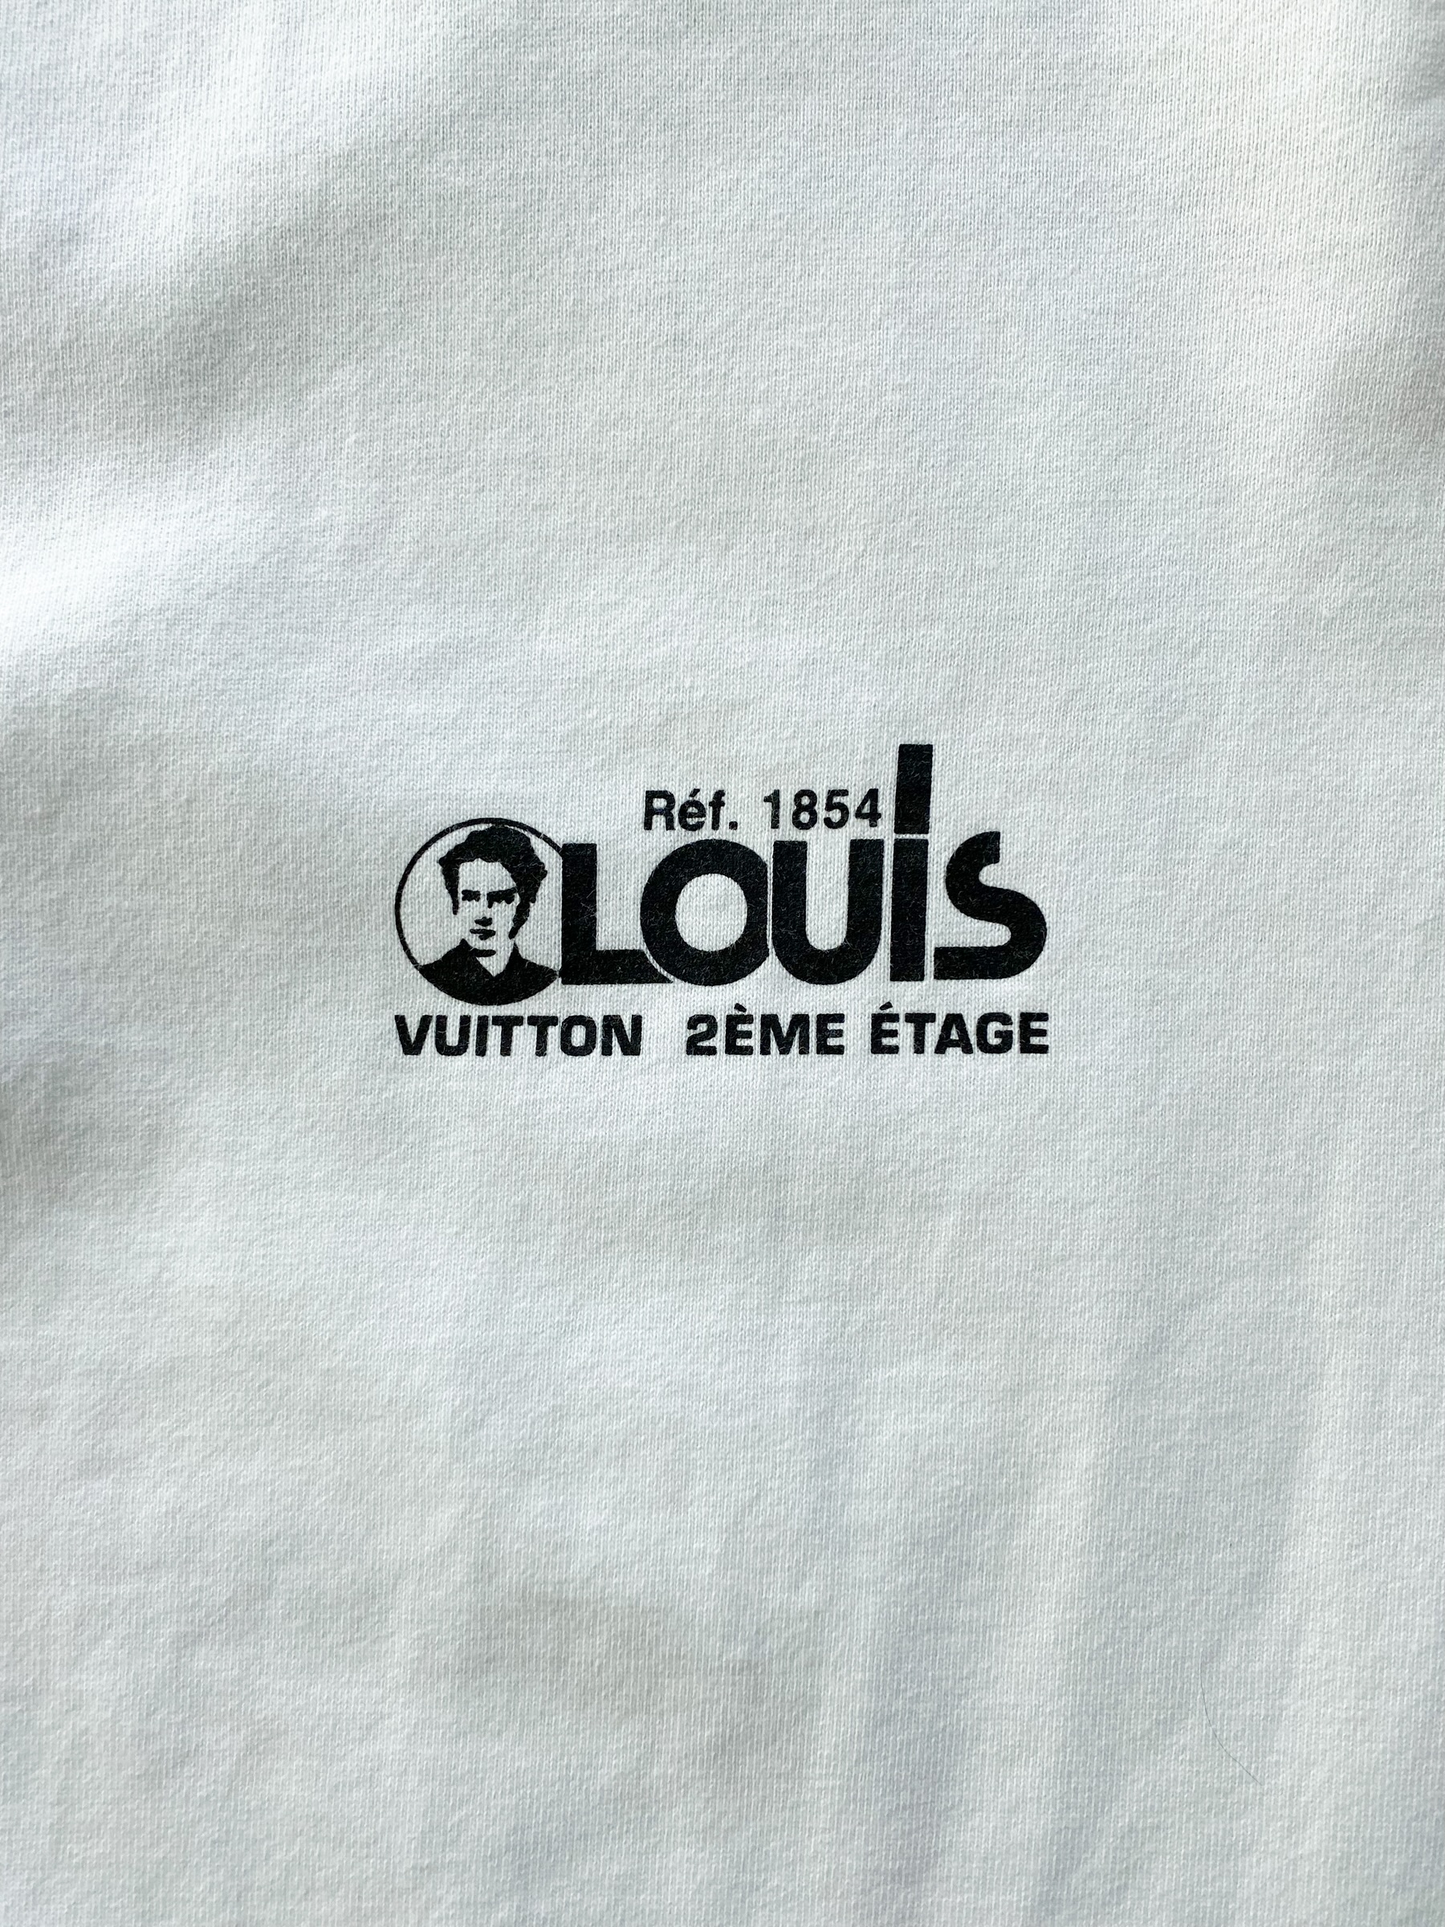 Louis Vuitton White T Shirt Réf. 1854 Blue Red Barcode Logo Brand